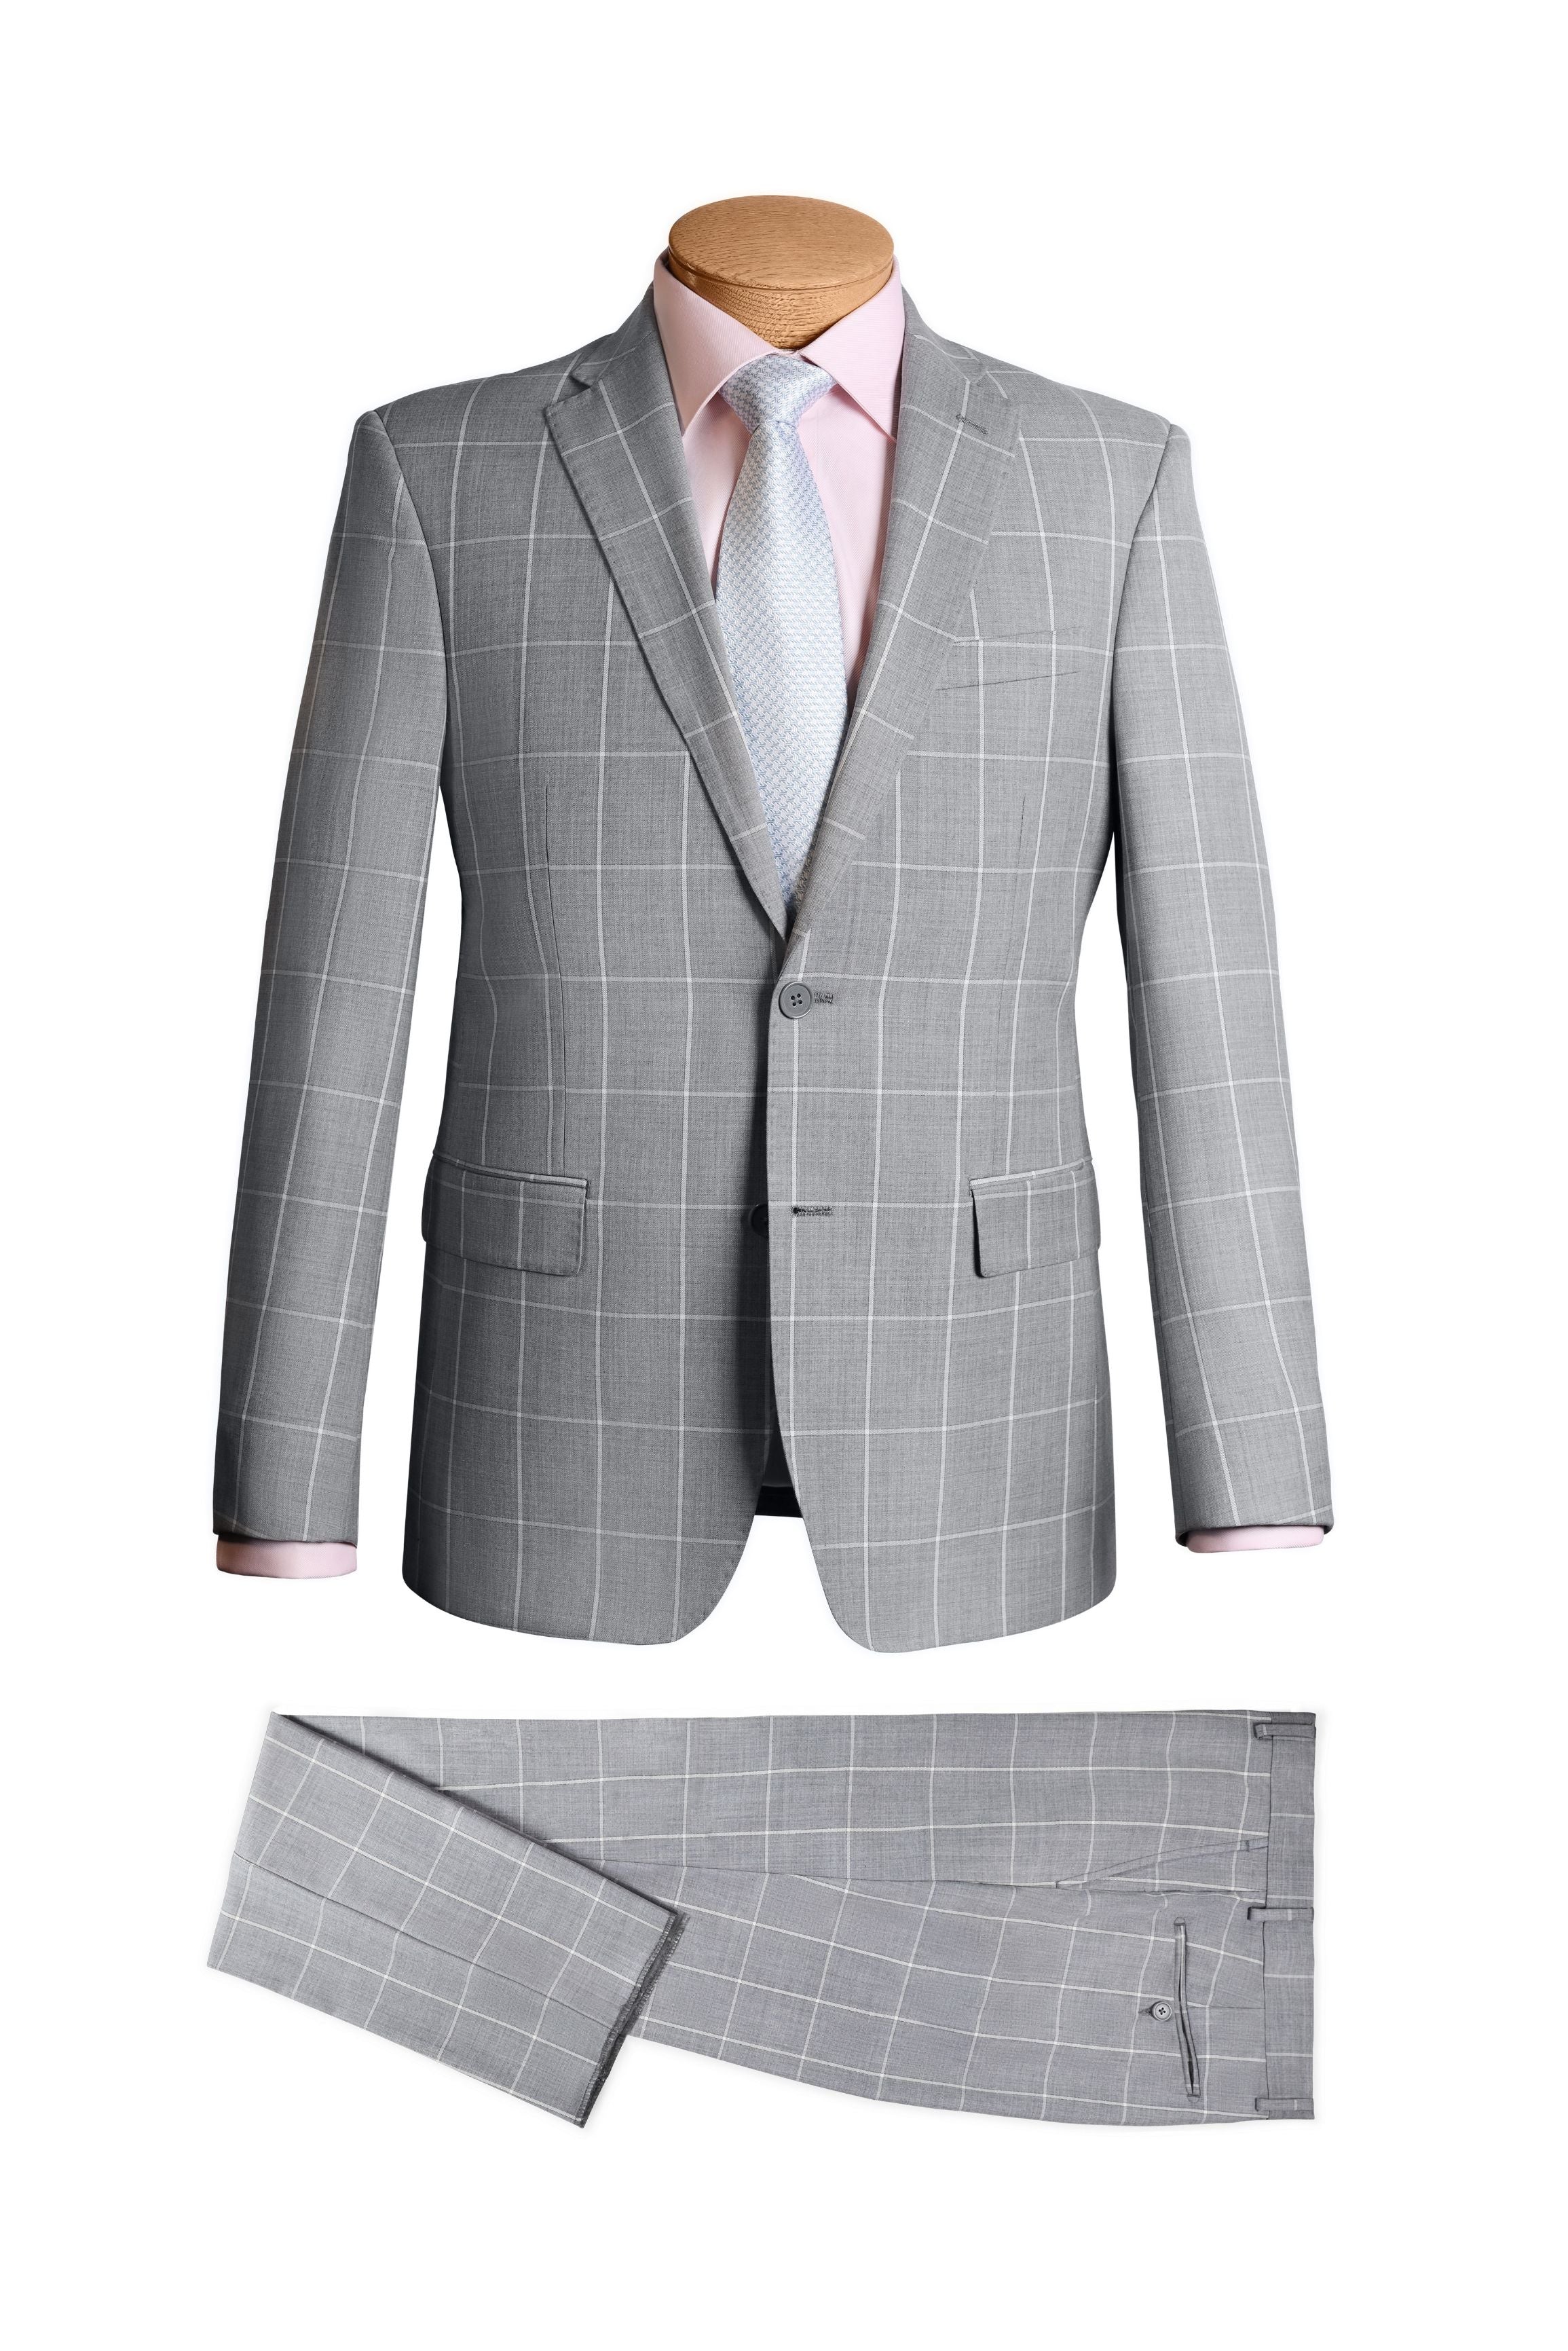 Plaid Grey Modern Suit - Mastroianni Fashions